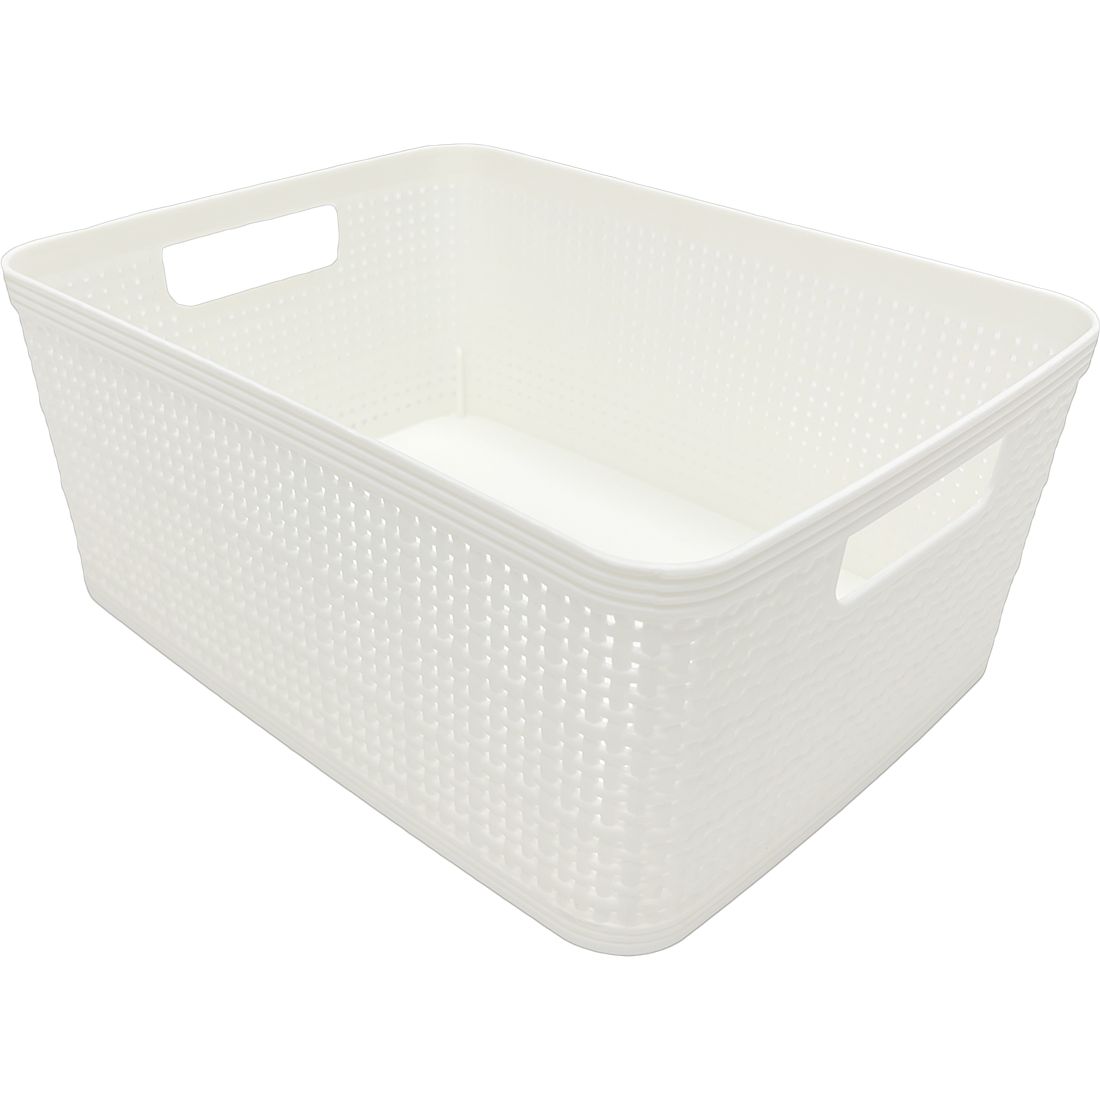 3 Pack Woven Plastic Storage Basket - White